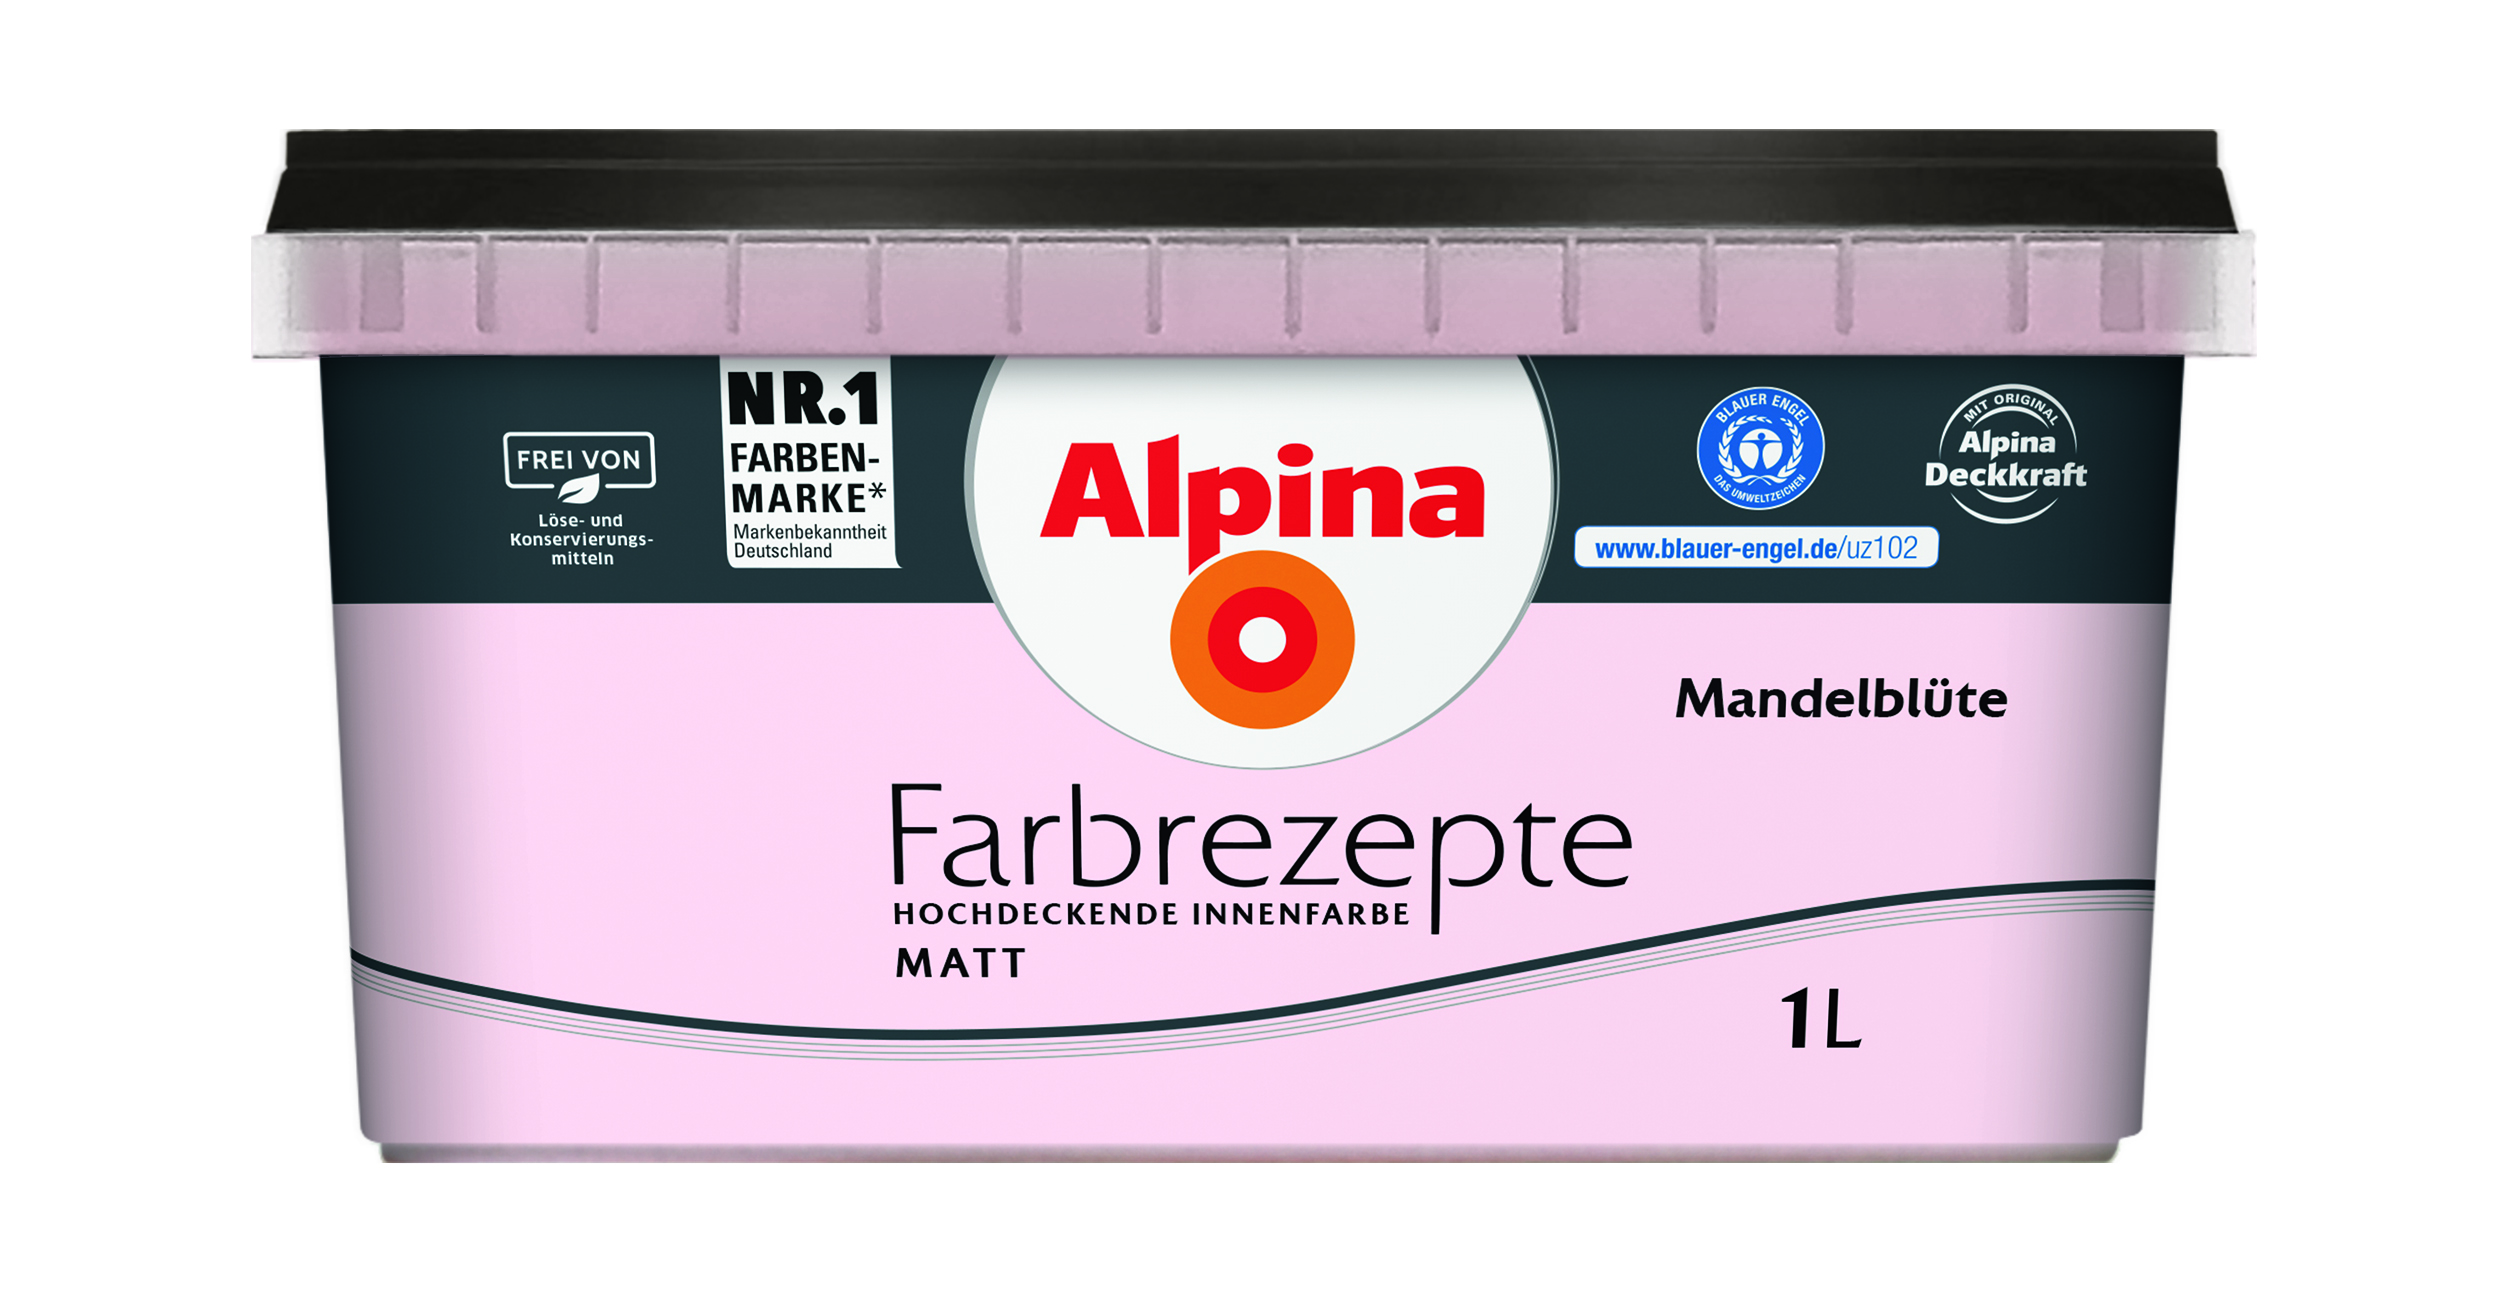 Alpina Farbrezepte Mandelblüte, 1L